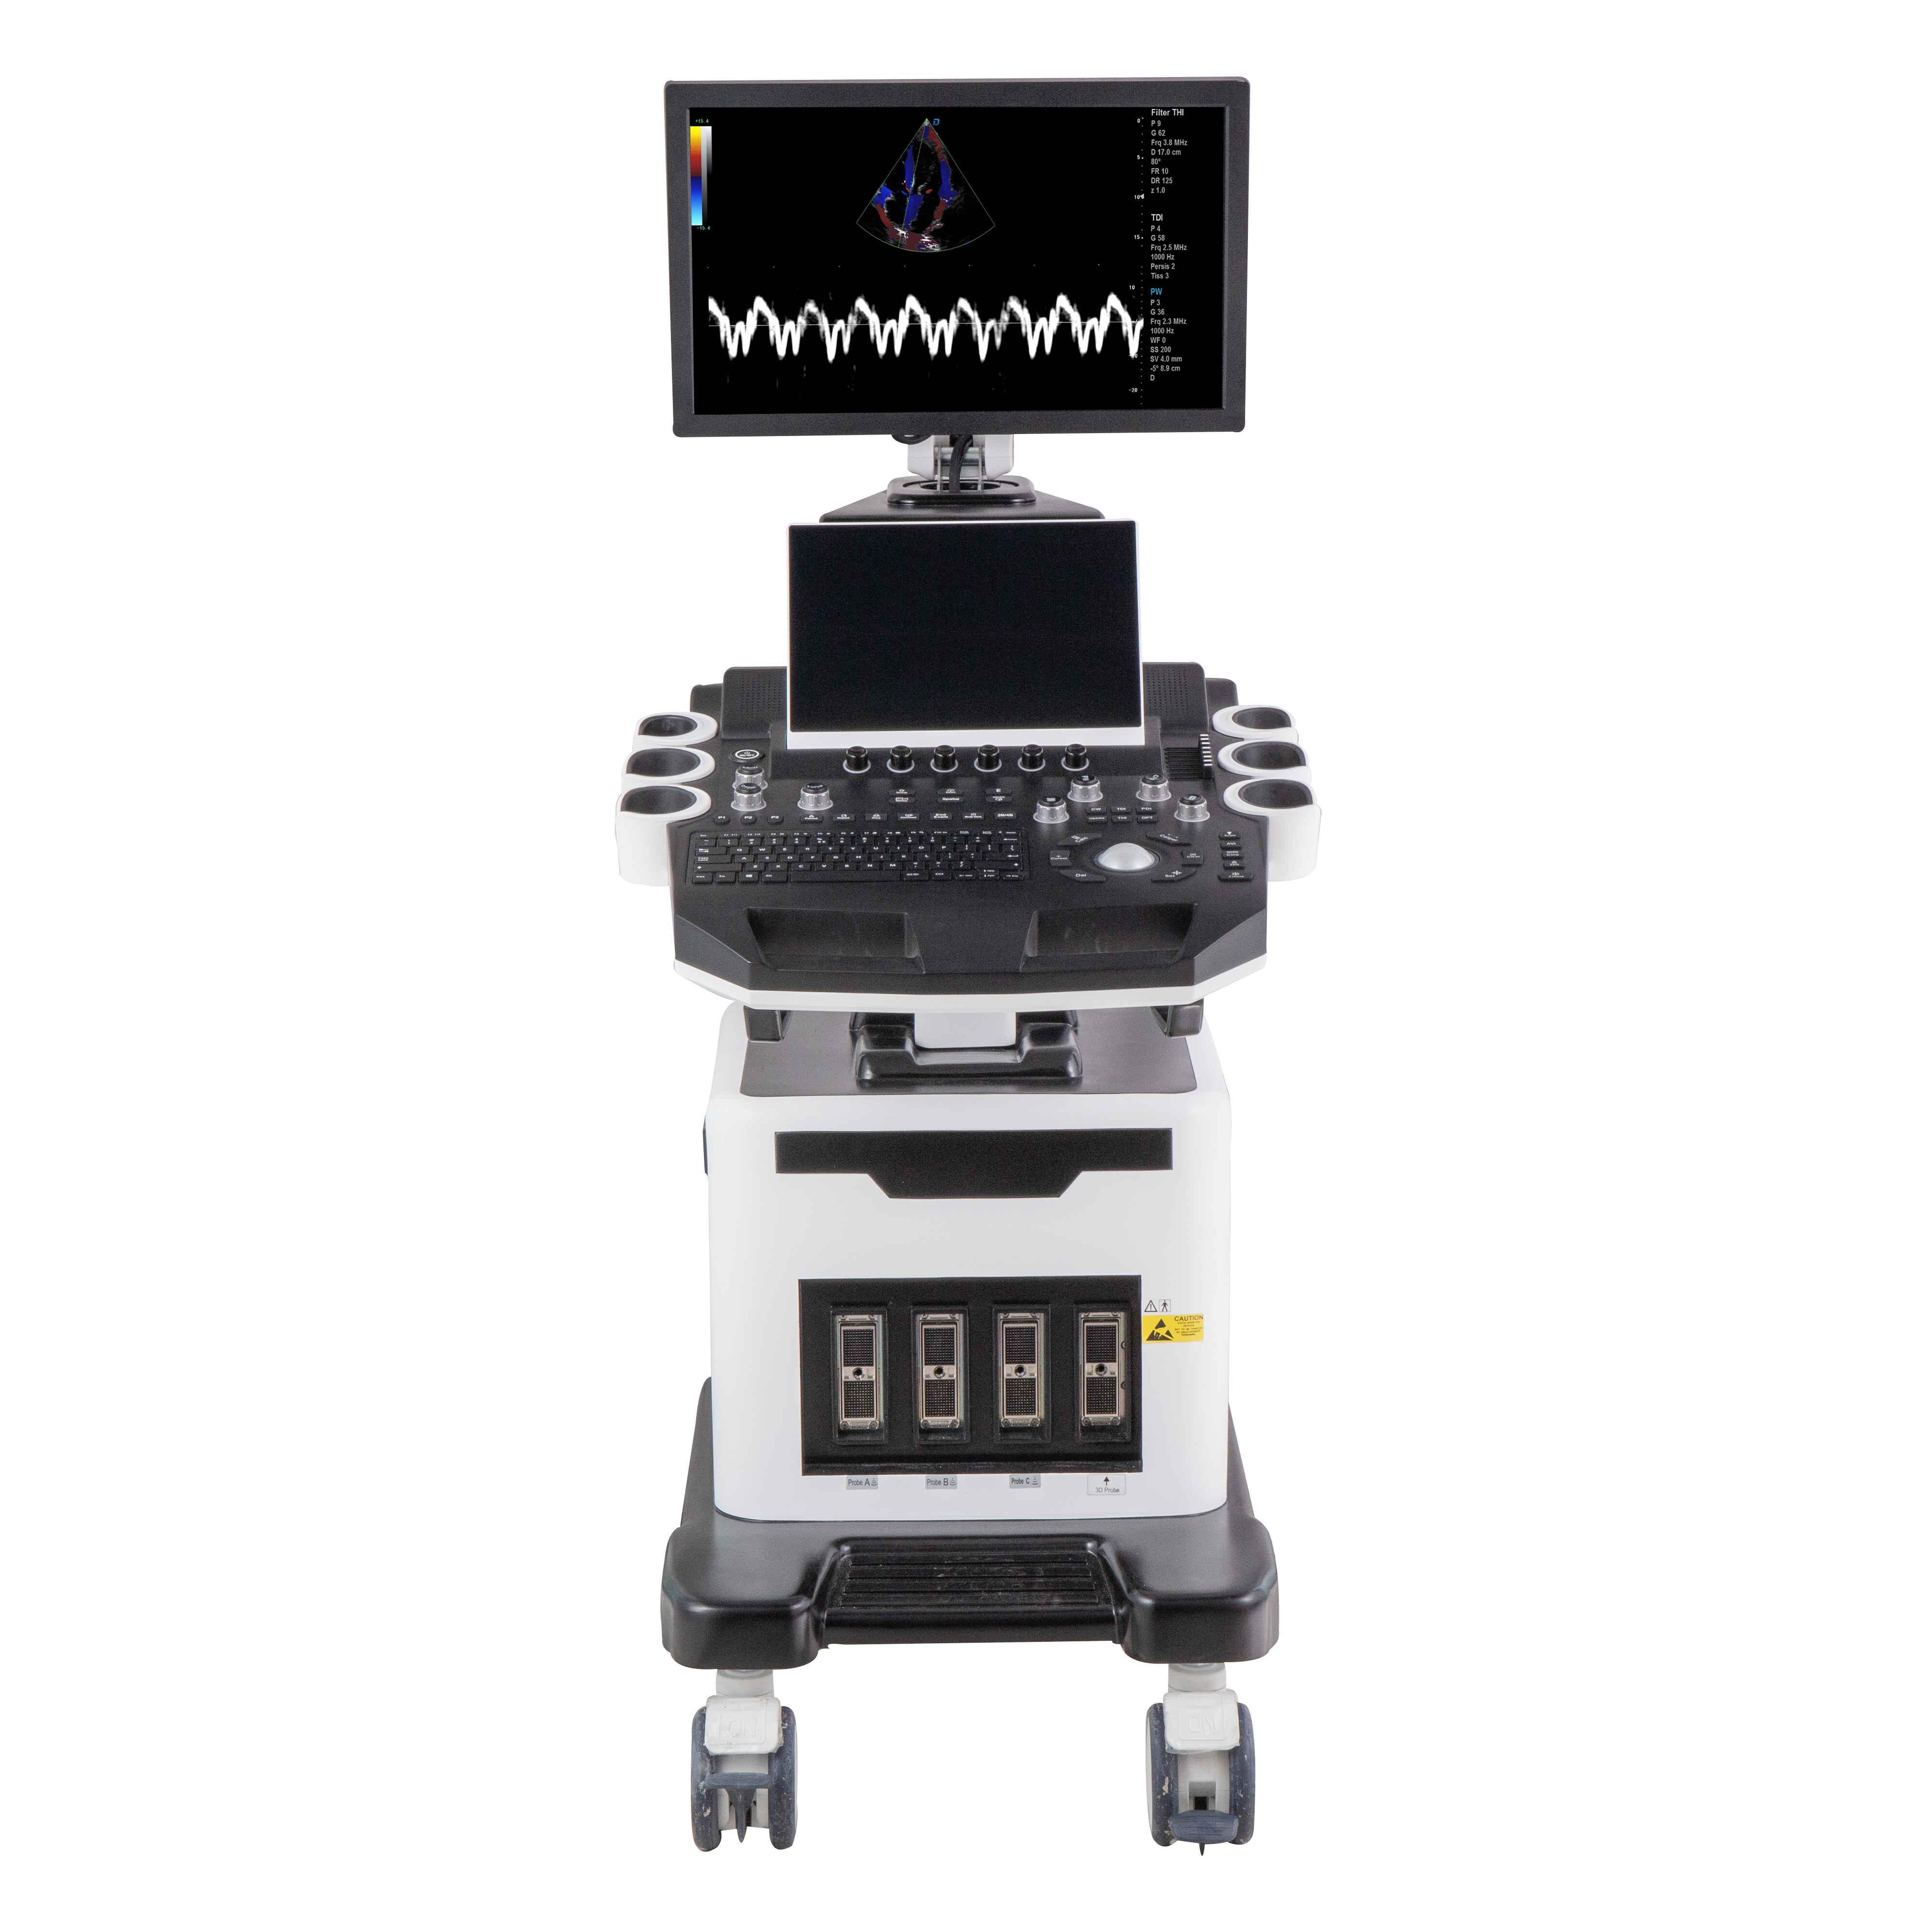 Amain OEM AMDV-T8  3D/4D  Color Doppler siterite ultrasound price/site-rite ultrasound with High-end Cardiac Ultrasound system